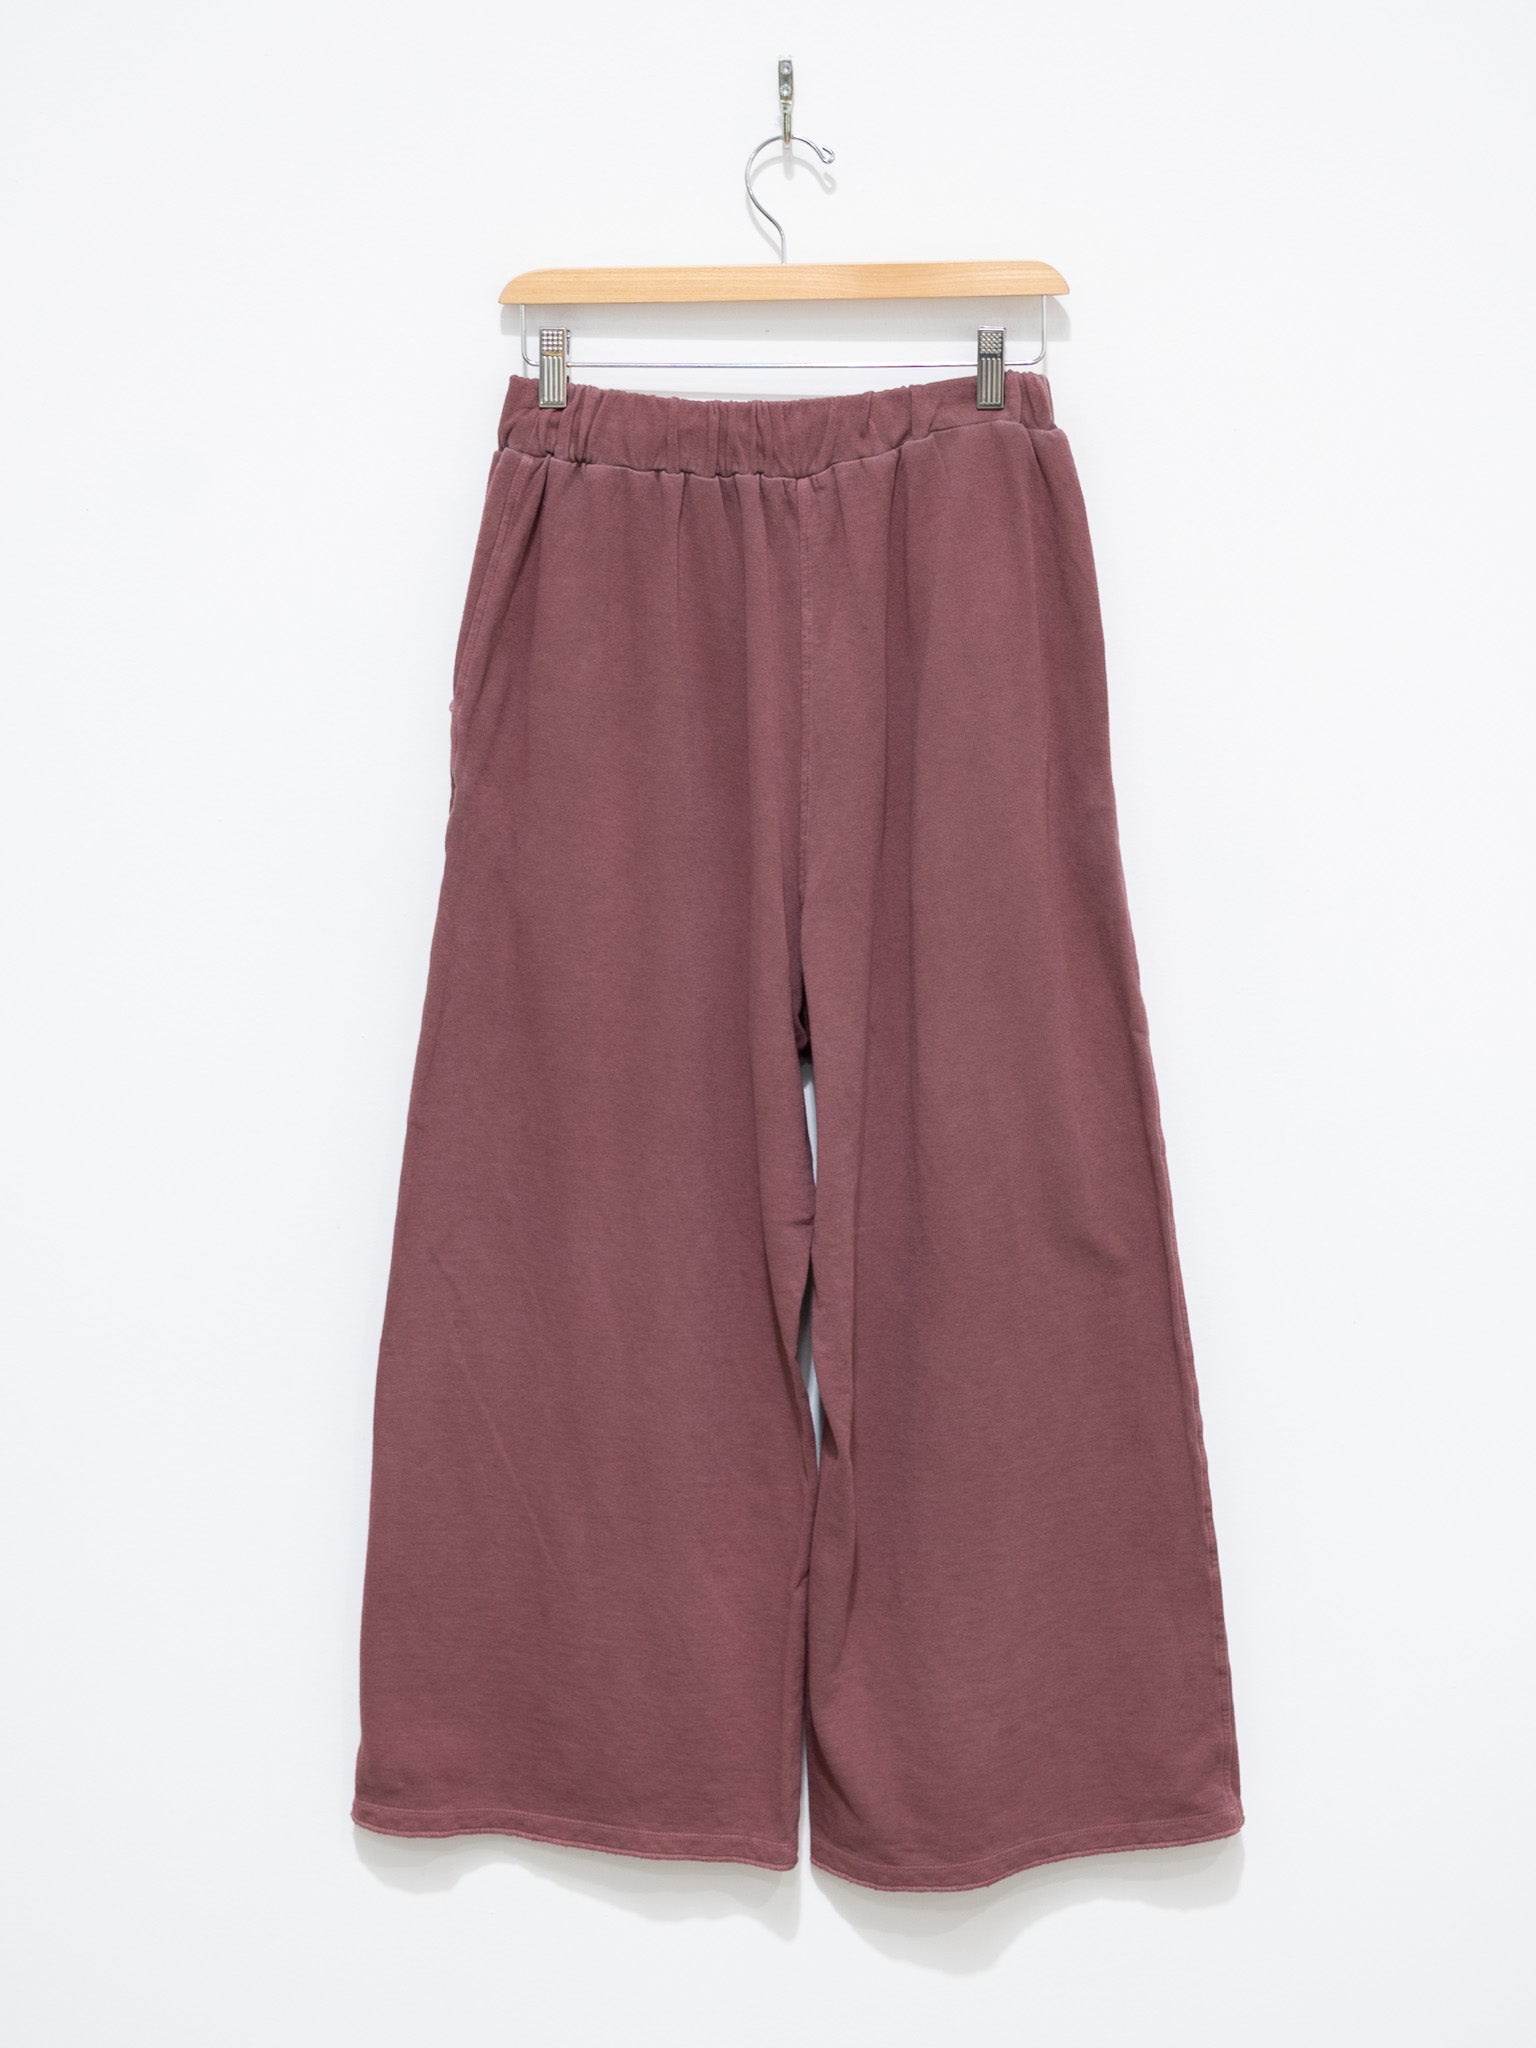 Namu Shop - ICHI Pigment Dyed Sweatpants - Red